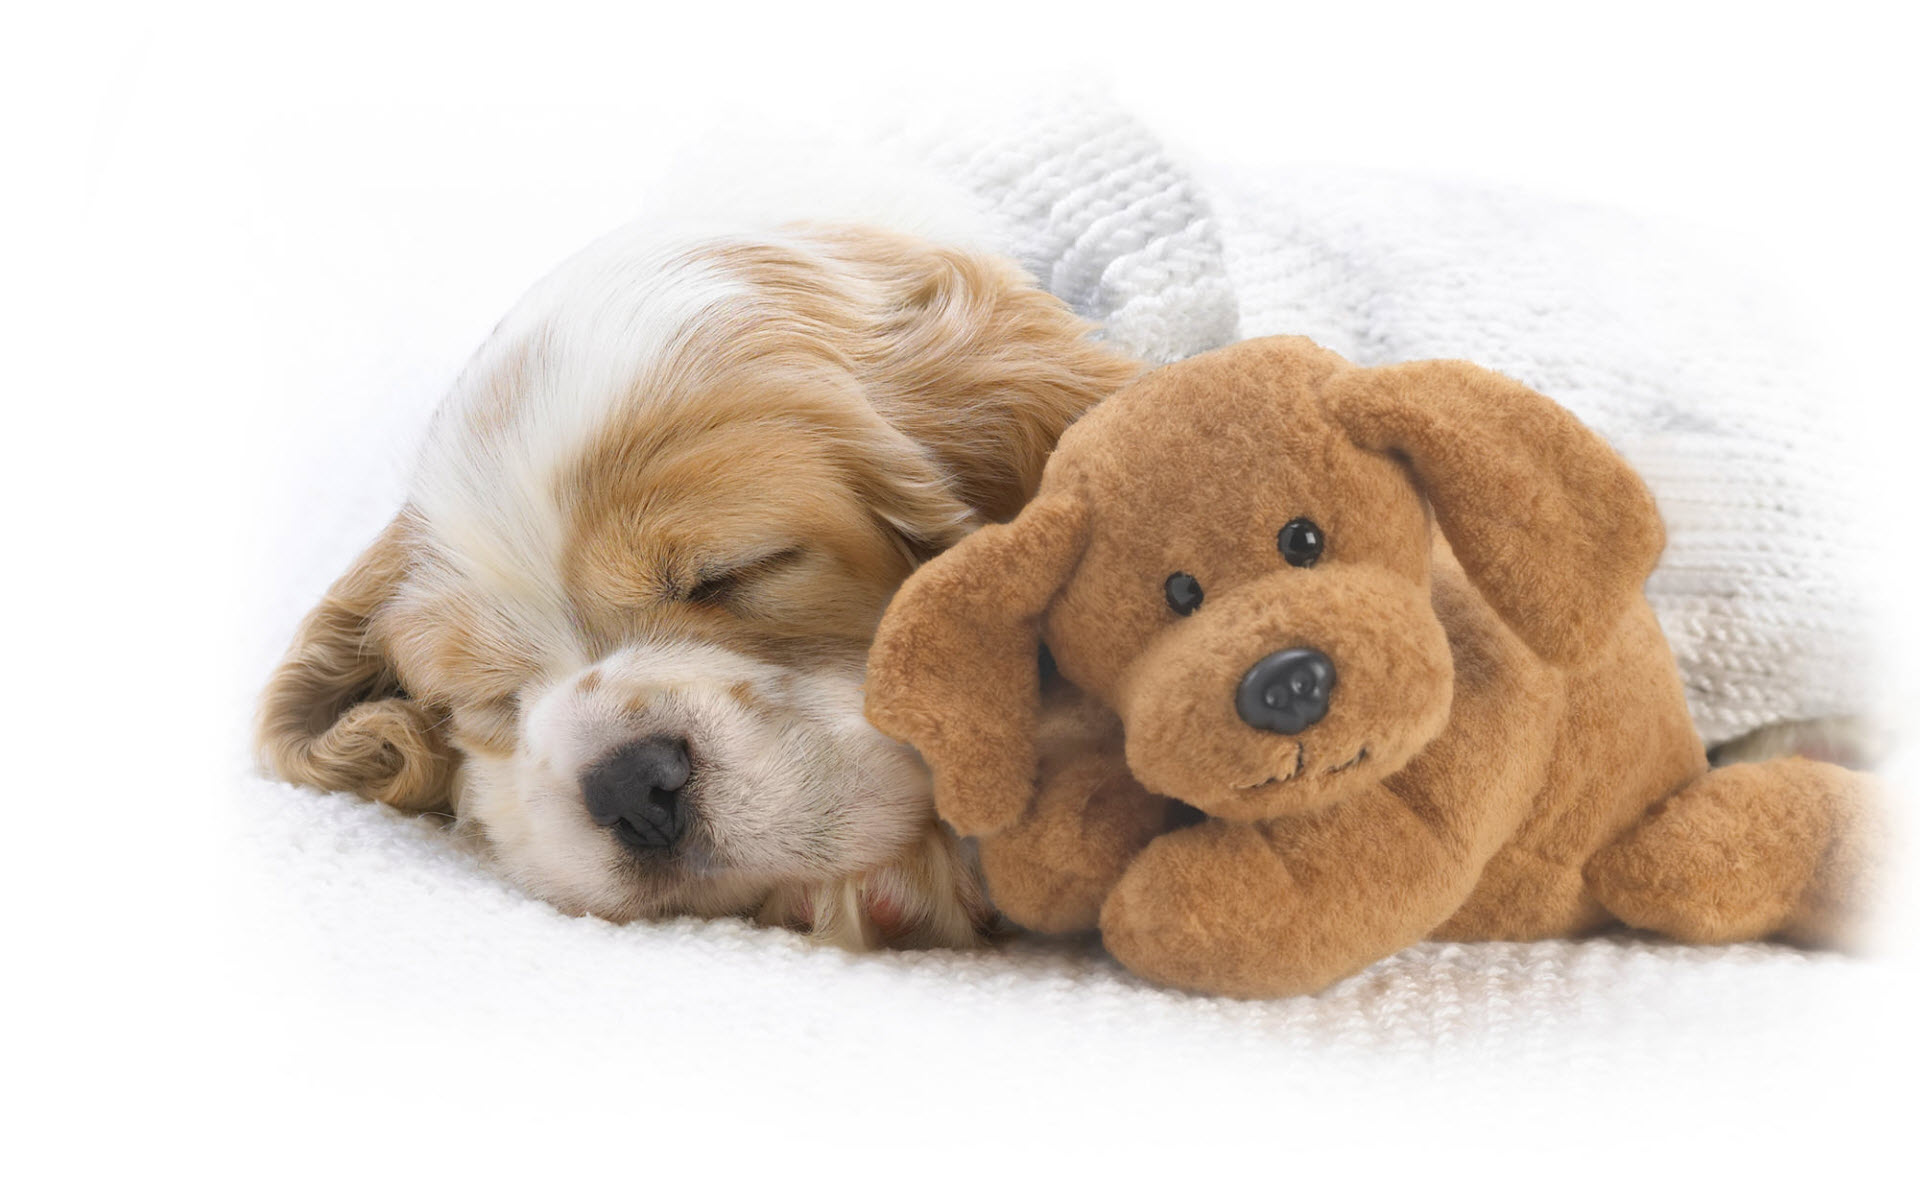 animal, cute, dog, puppy, sleeping, stuffed animal, toy